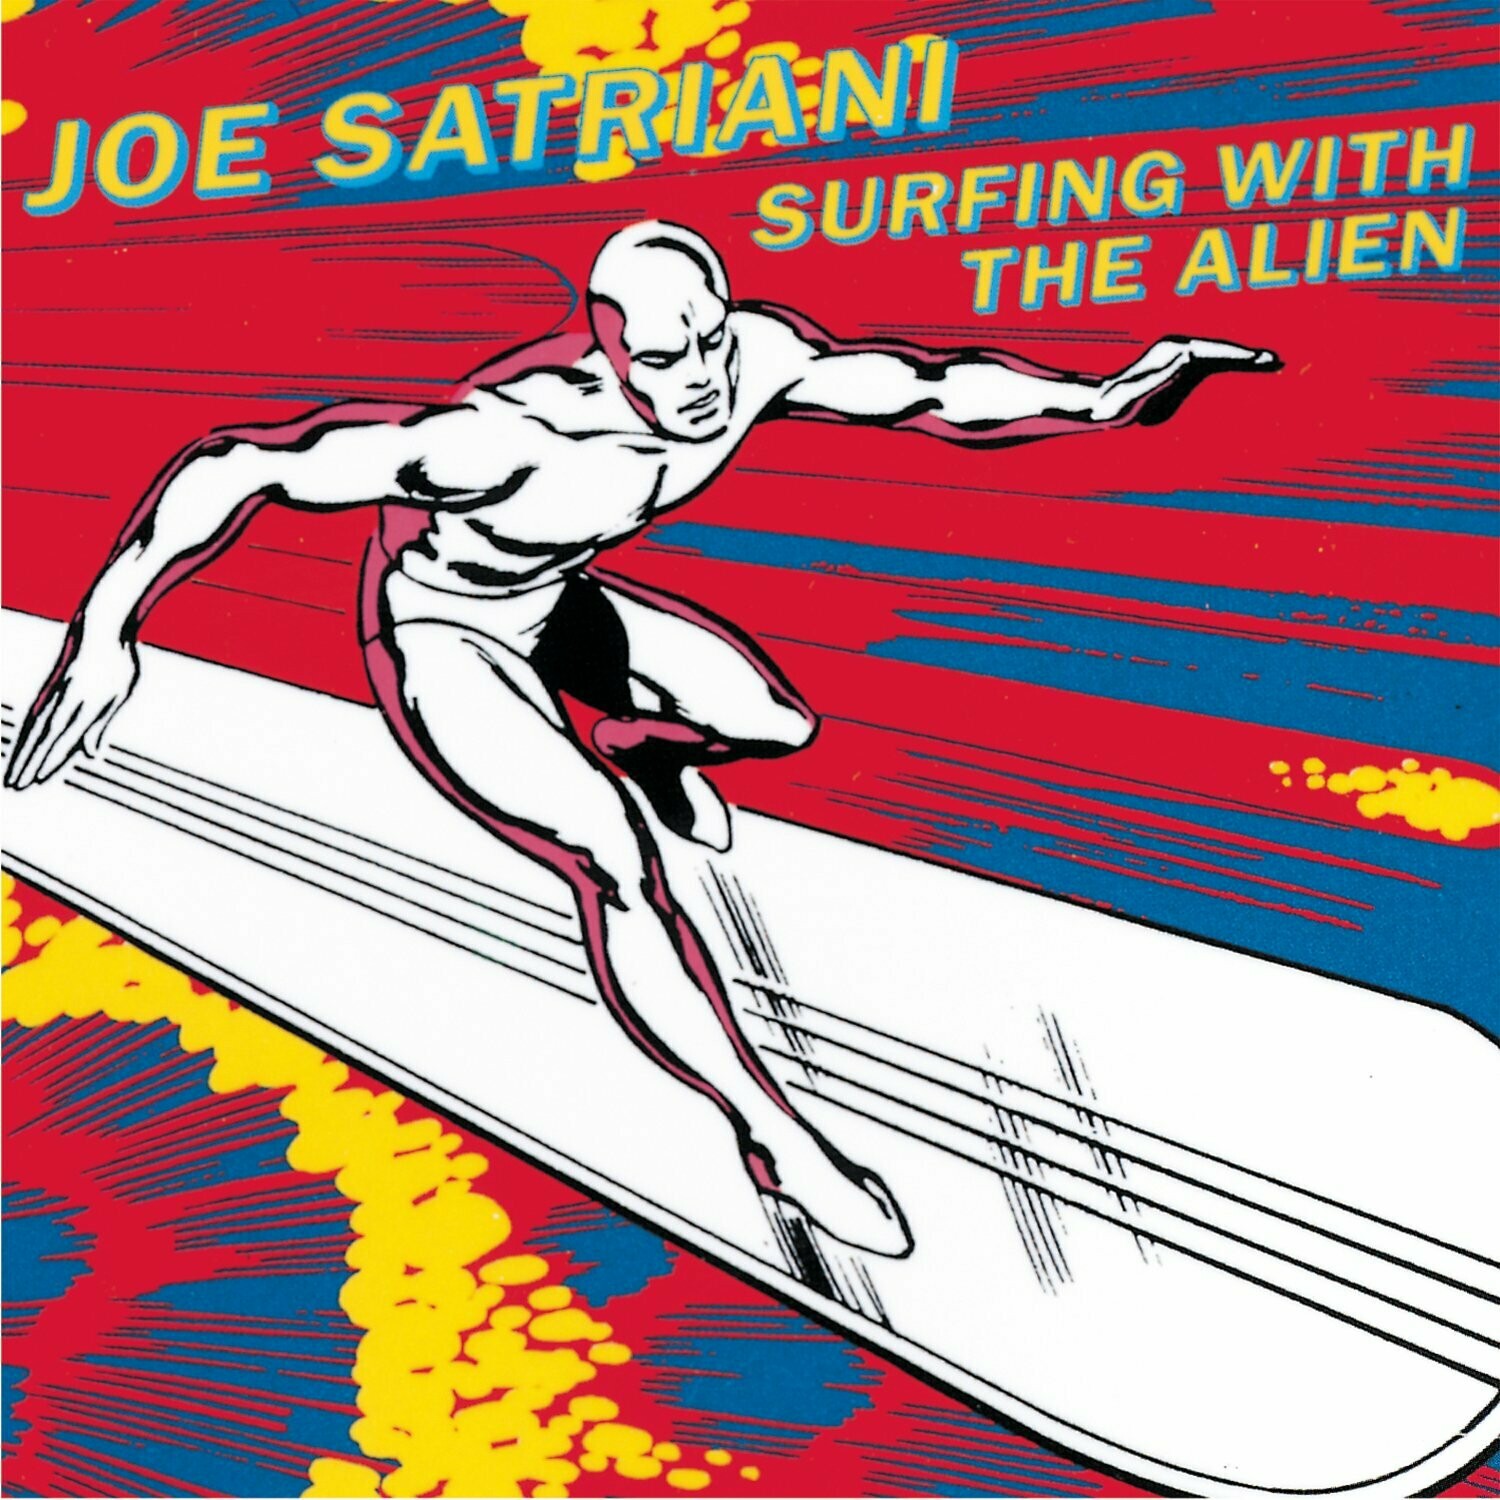 Joe Satriani "Surfing With The Alien" NM 1987